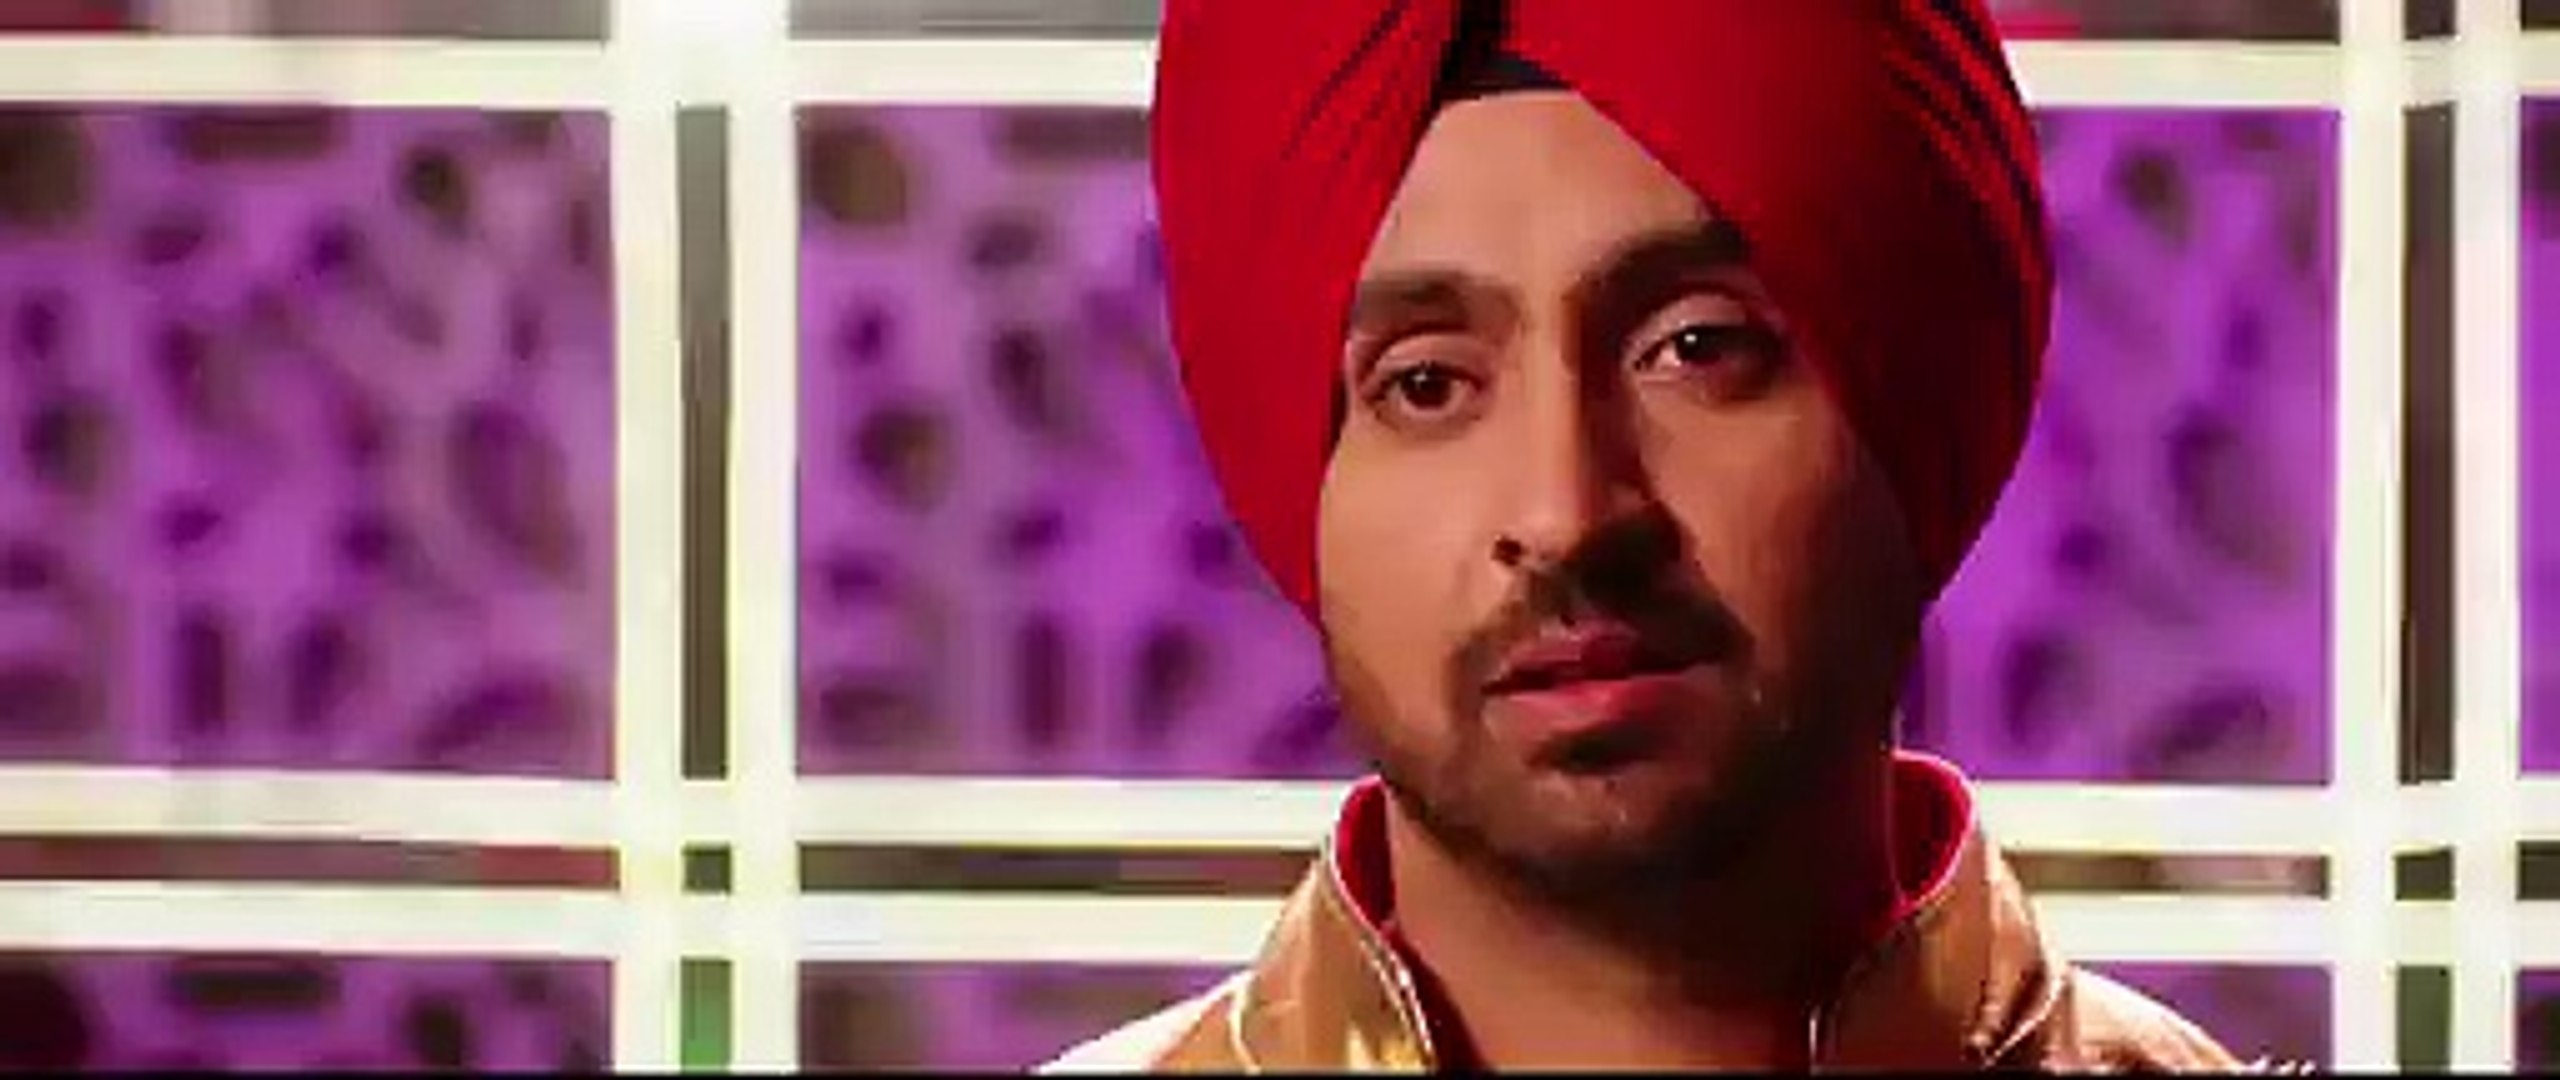 Sweetu Surveen Chawla Songs Latest New Punjabi Songs 2015 New Latest Hindi Bollywood Songs 2015 HD t